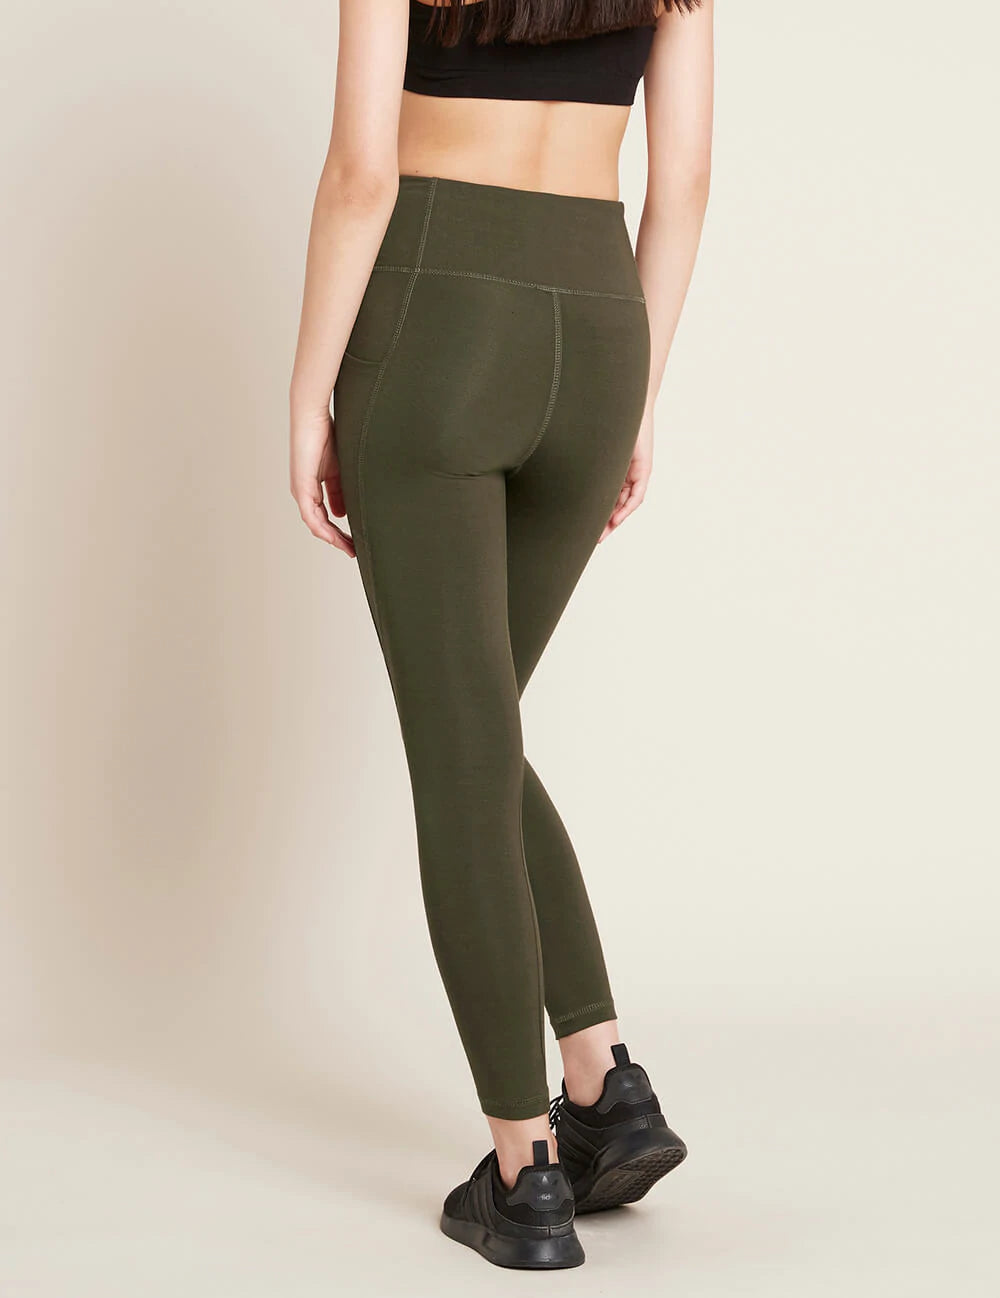 Solid leggings with back zip pocket – ImageBoutique